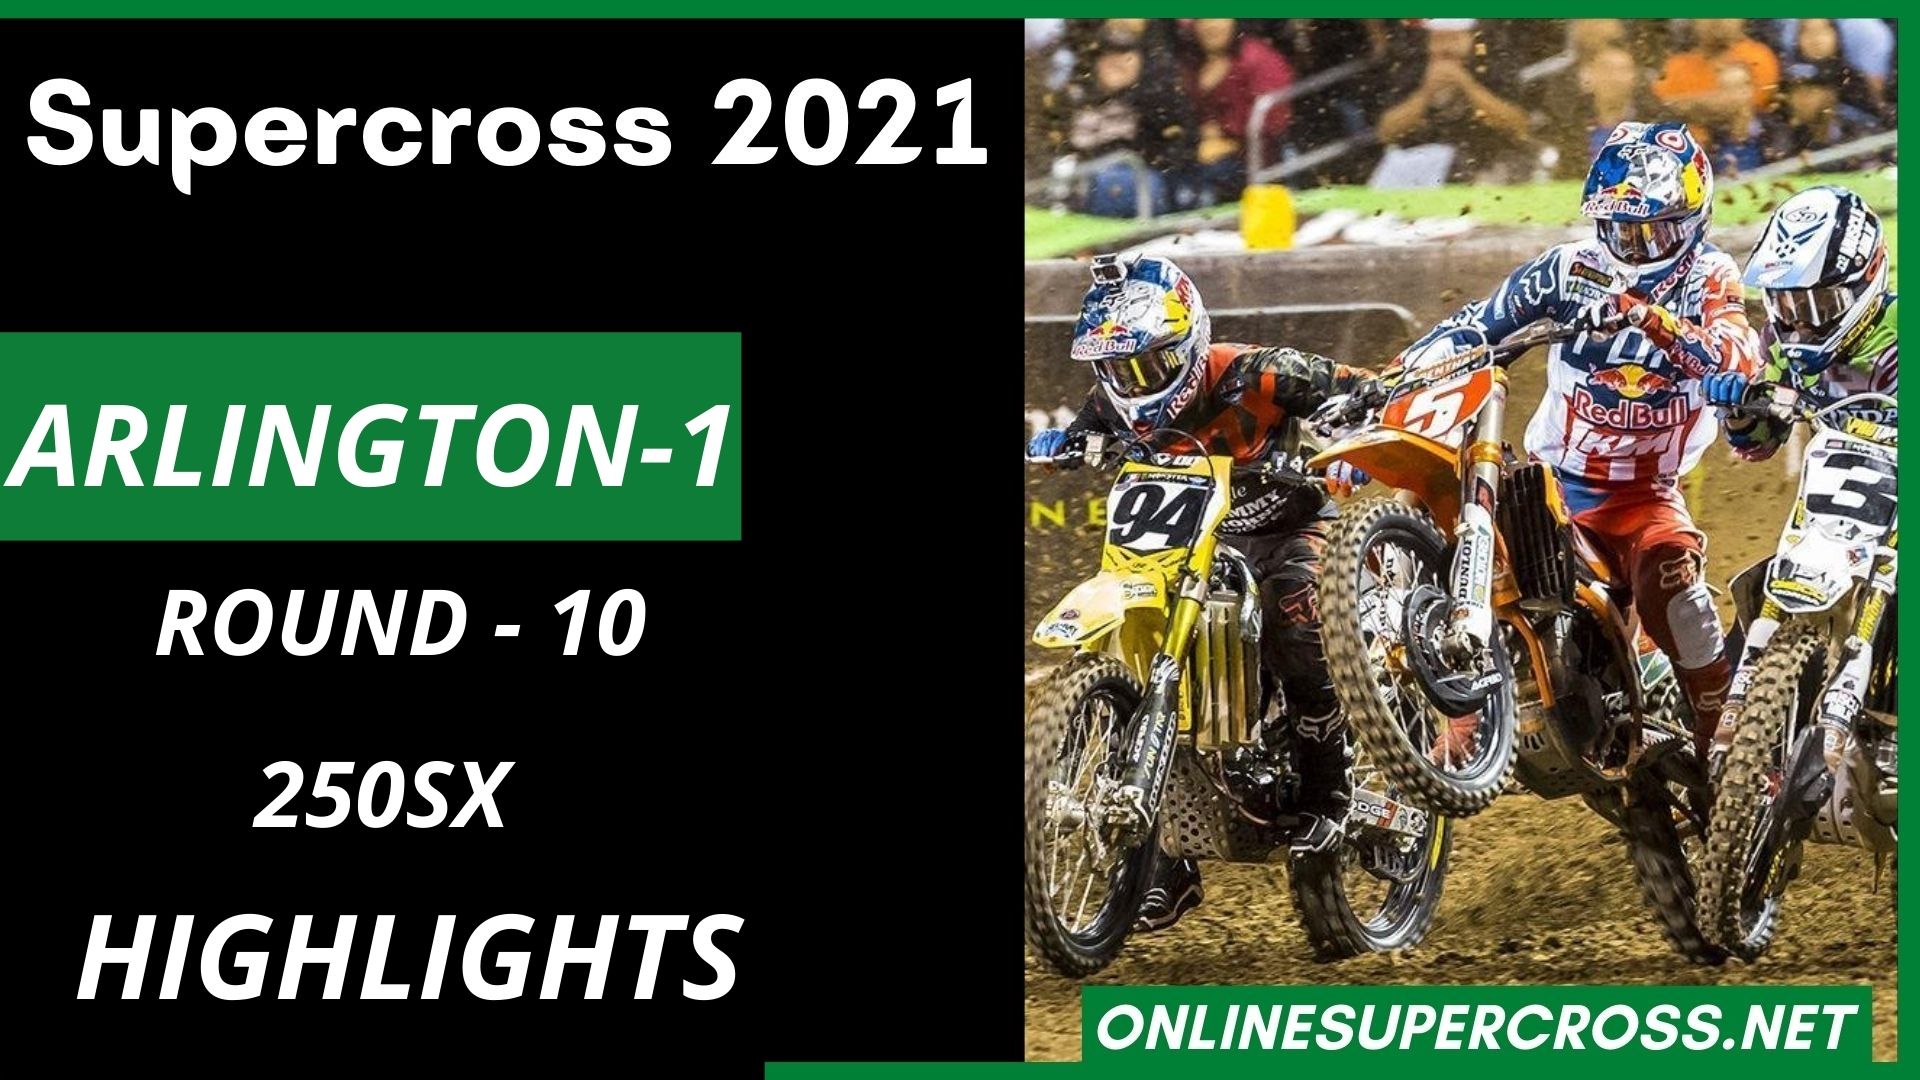 Arlington 1 Round 10 250SX Highlights 2021 Supercross